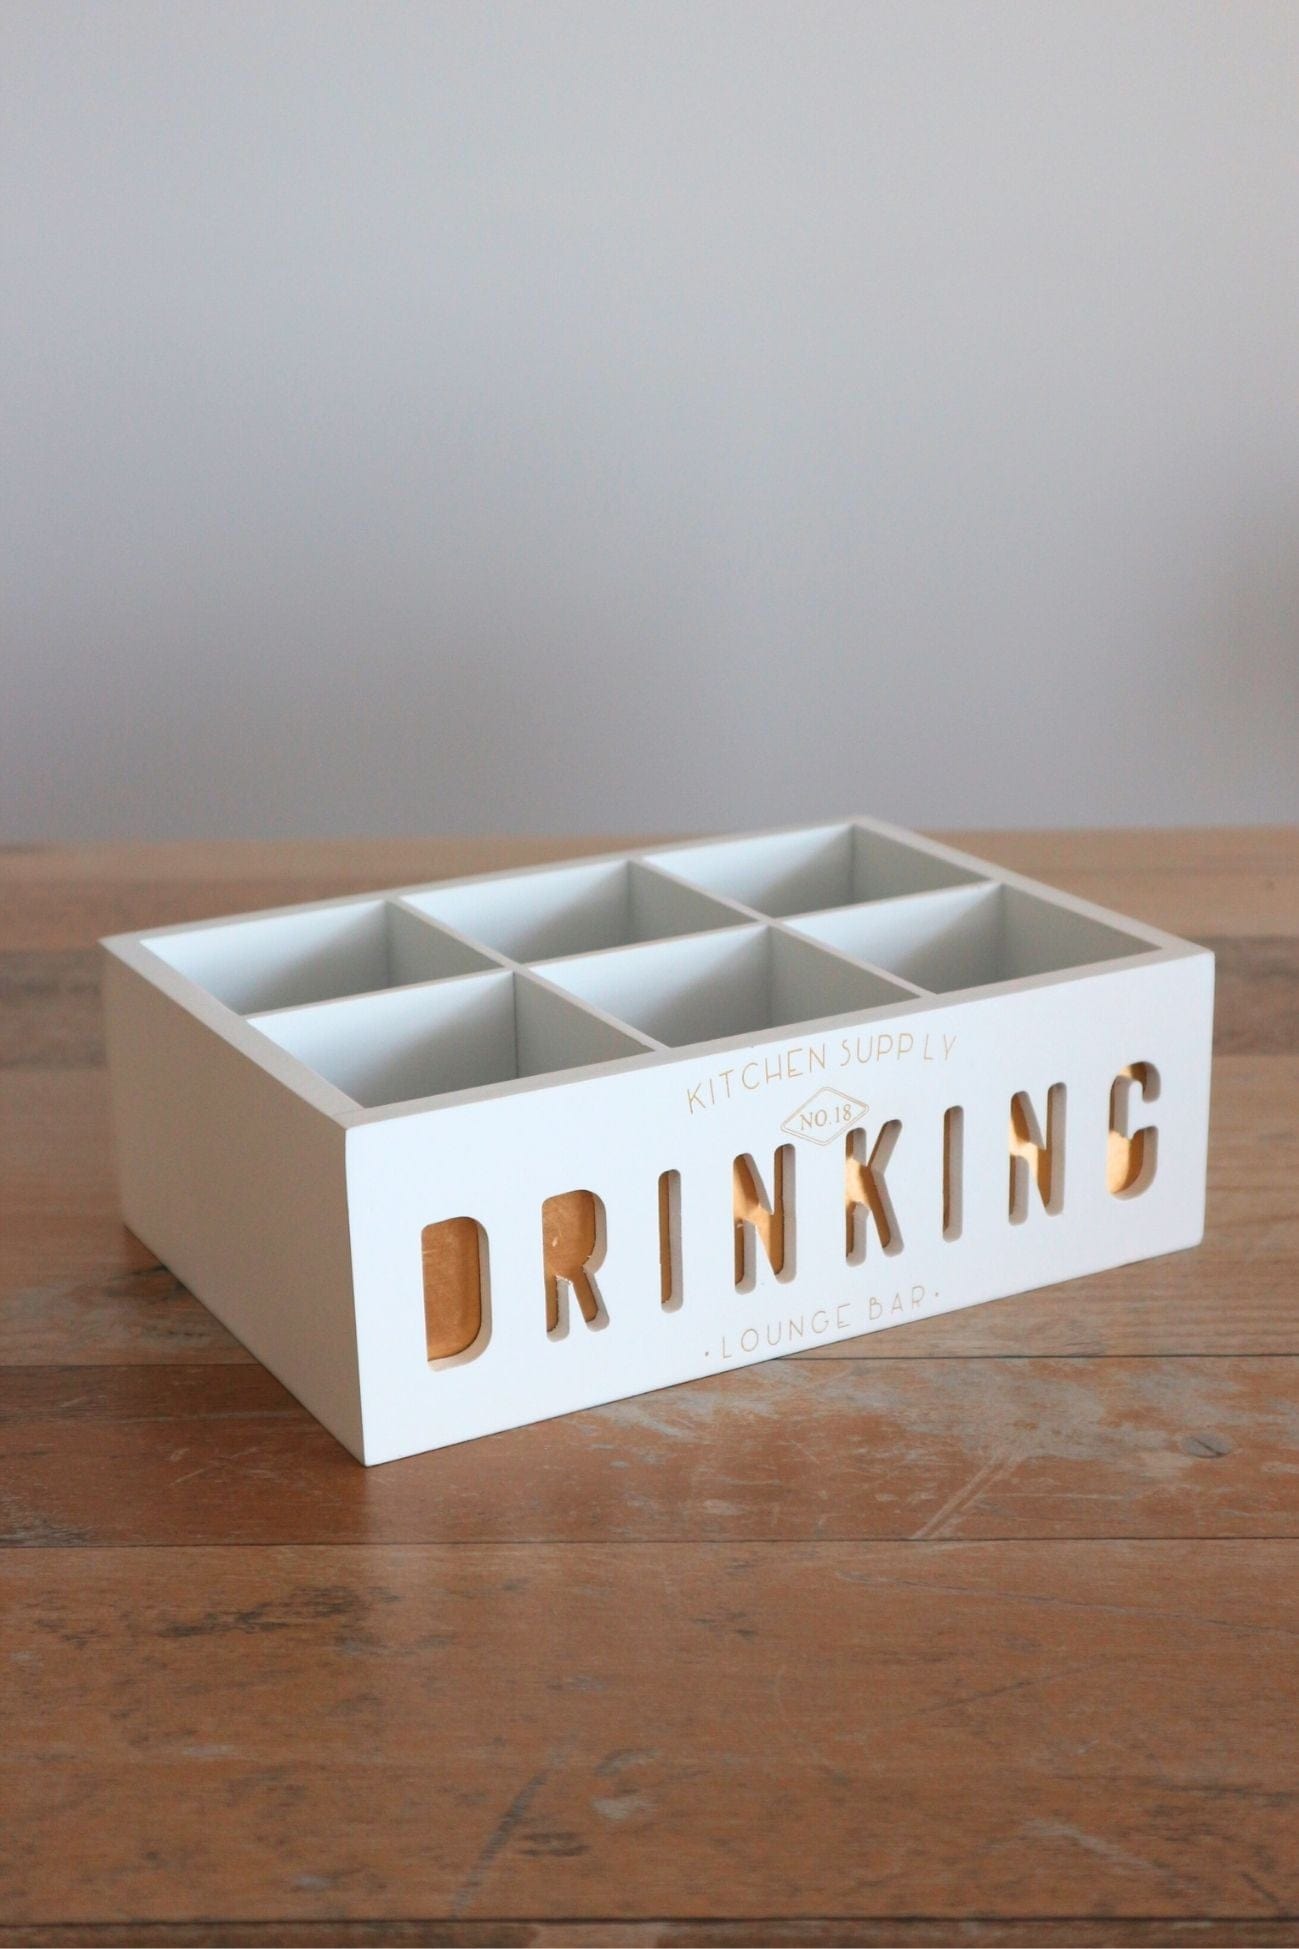 Item International Drinking Drinking - Portabottiglie in legno bianco | Item International